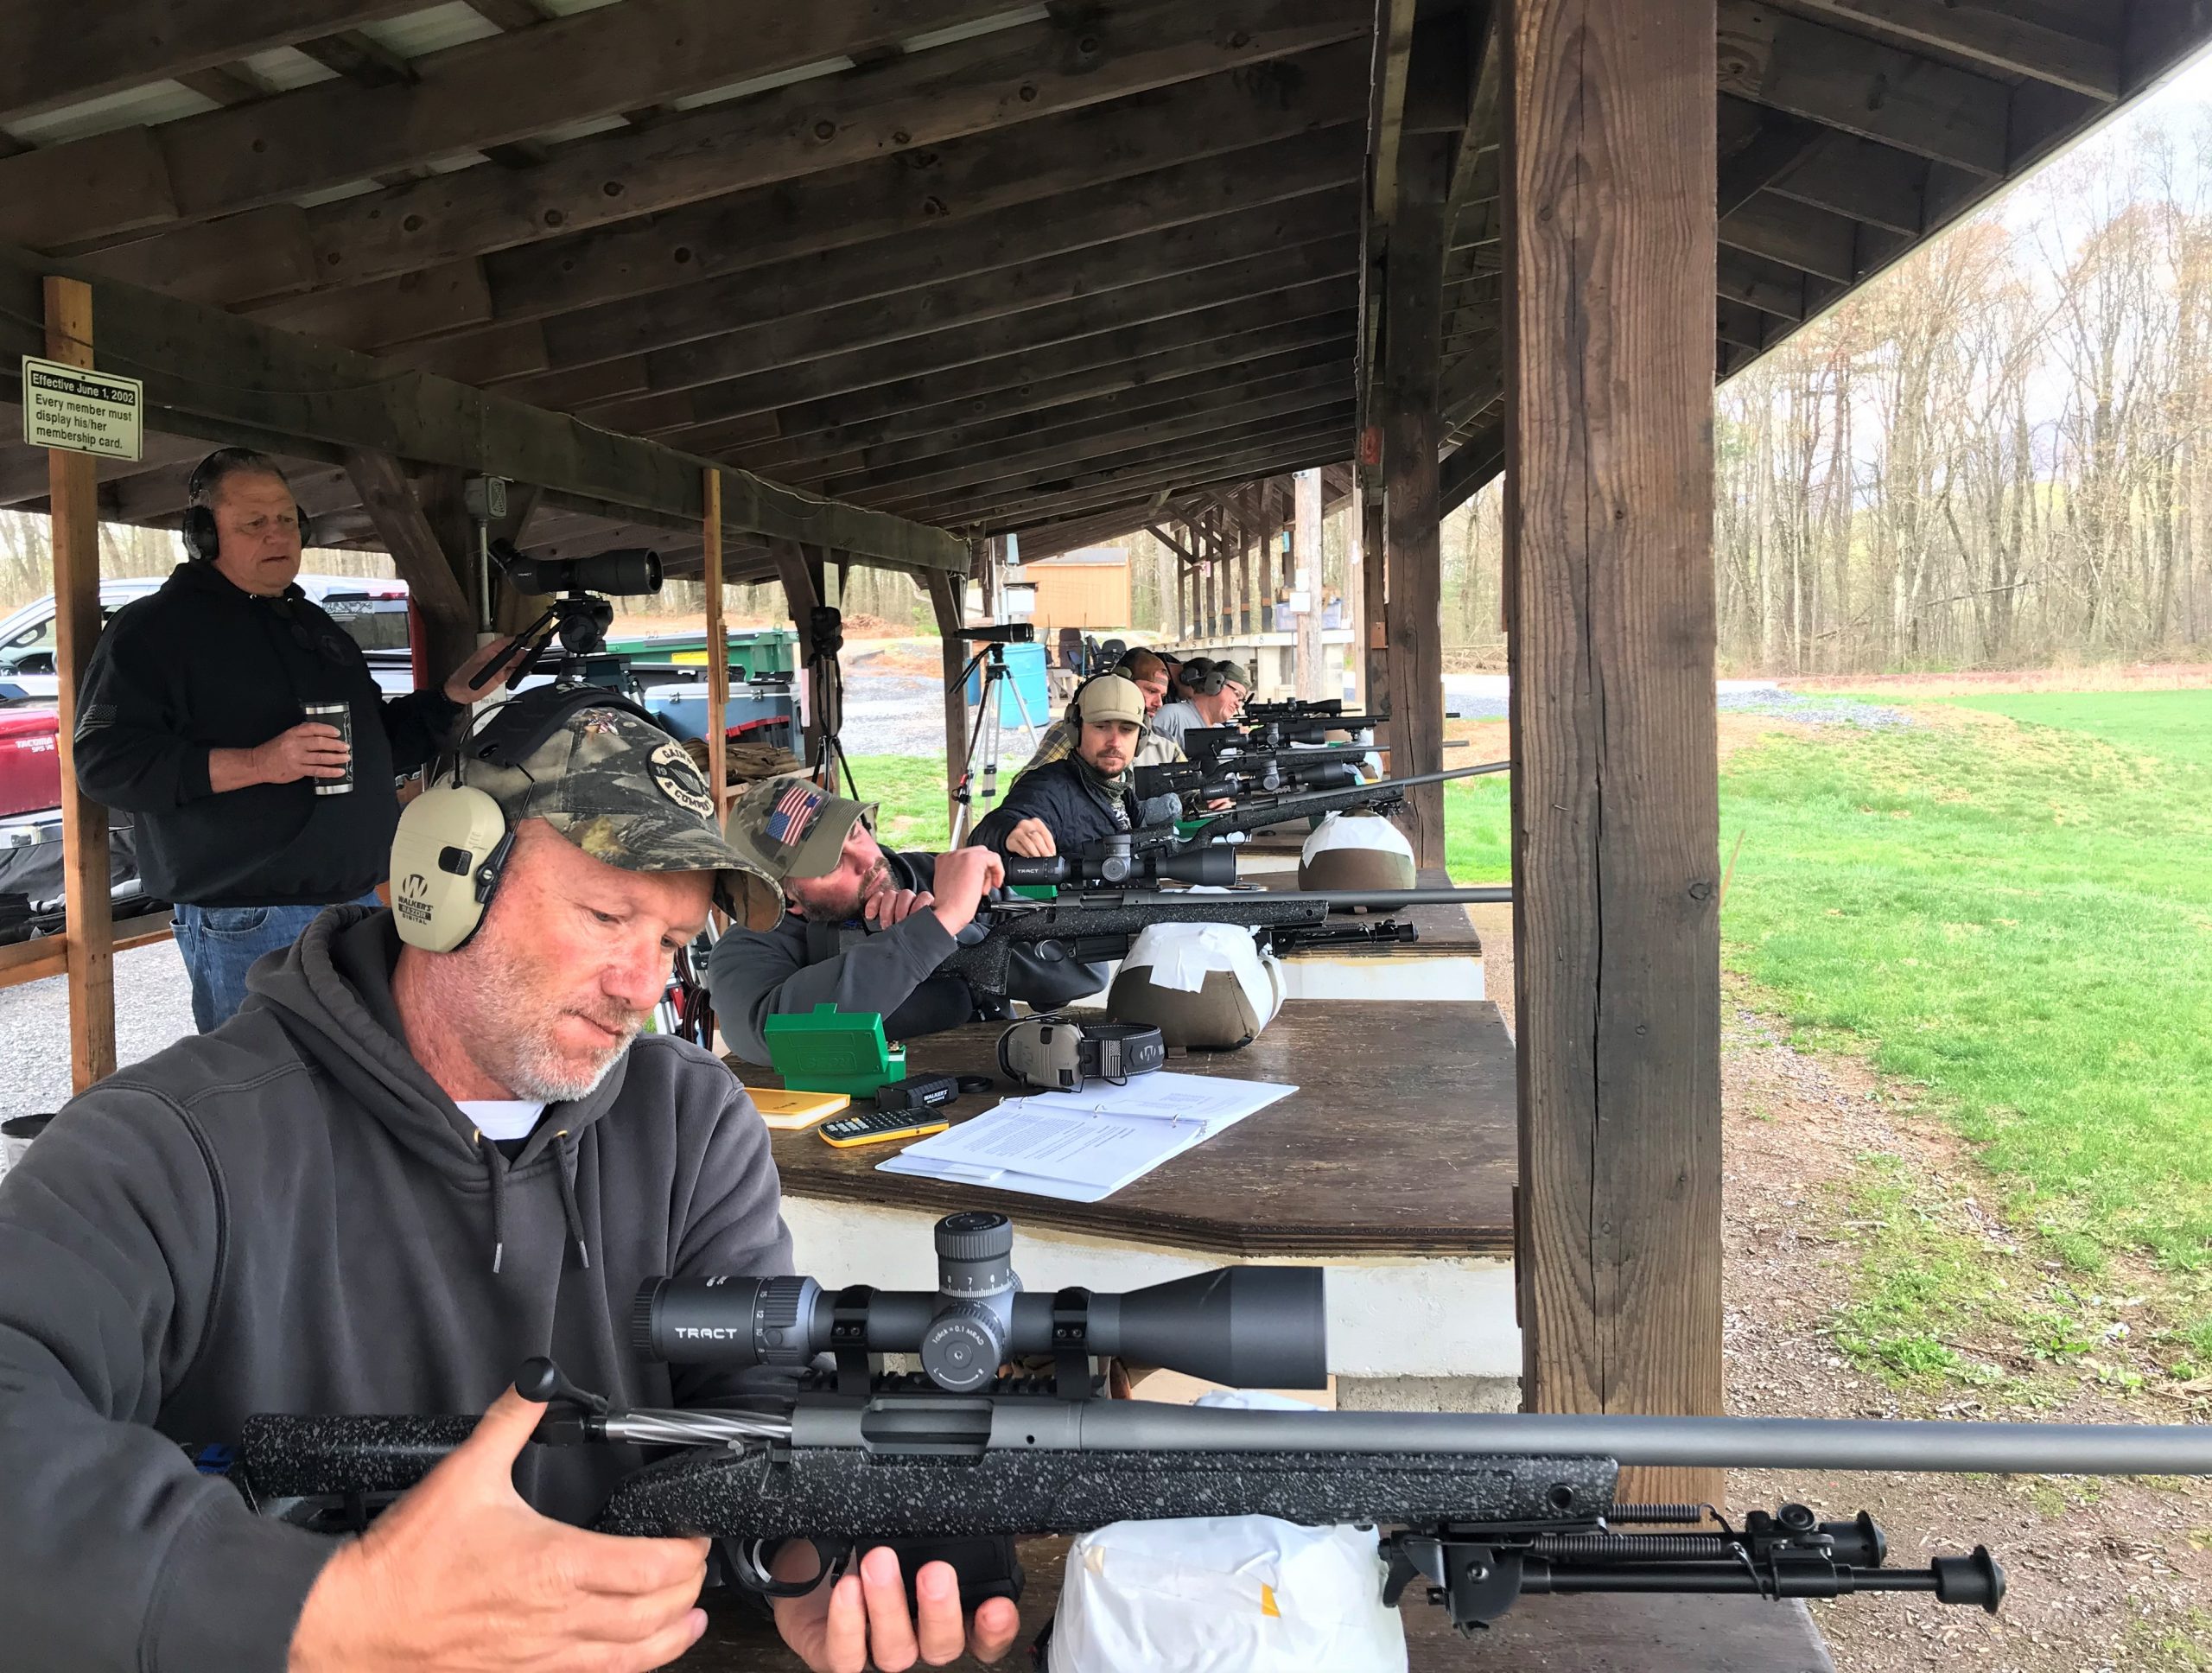 Attending a Long Range Shooting Course